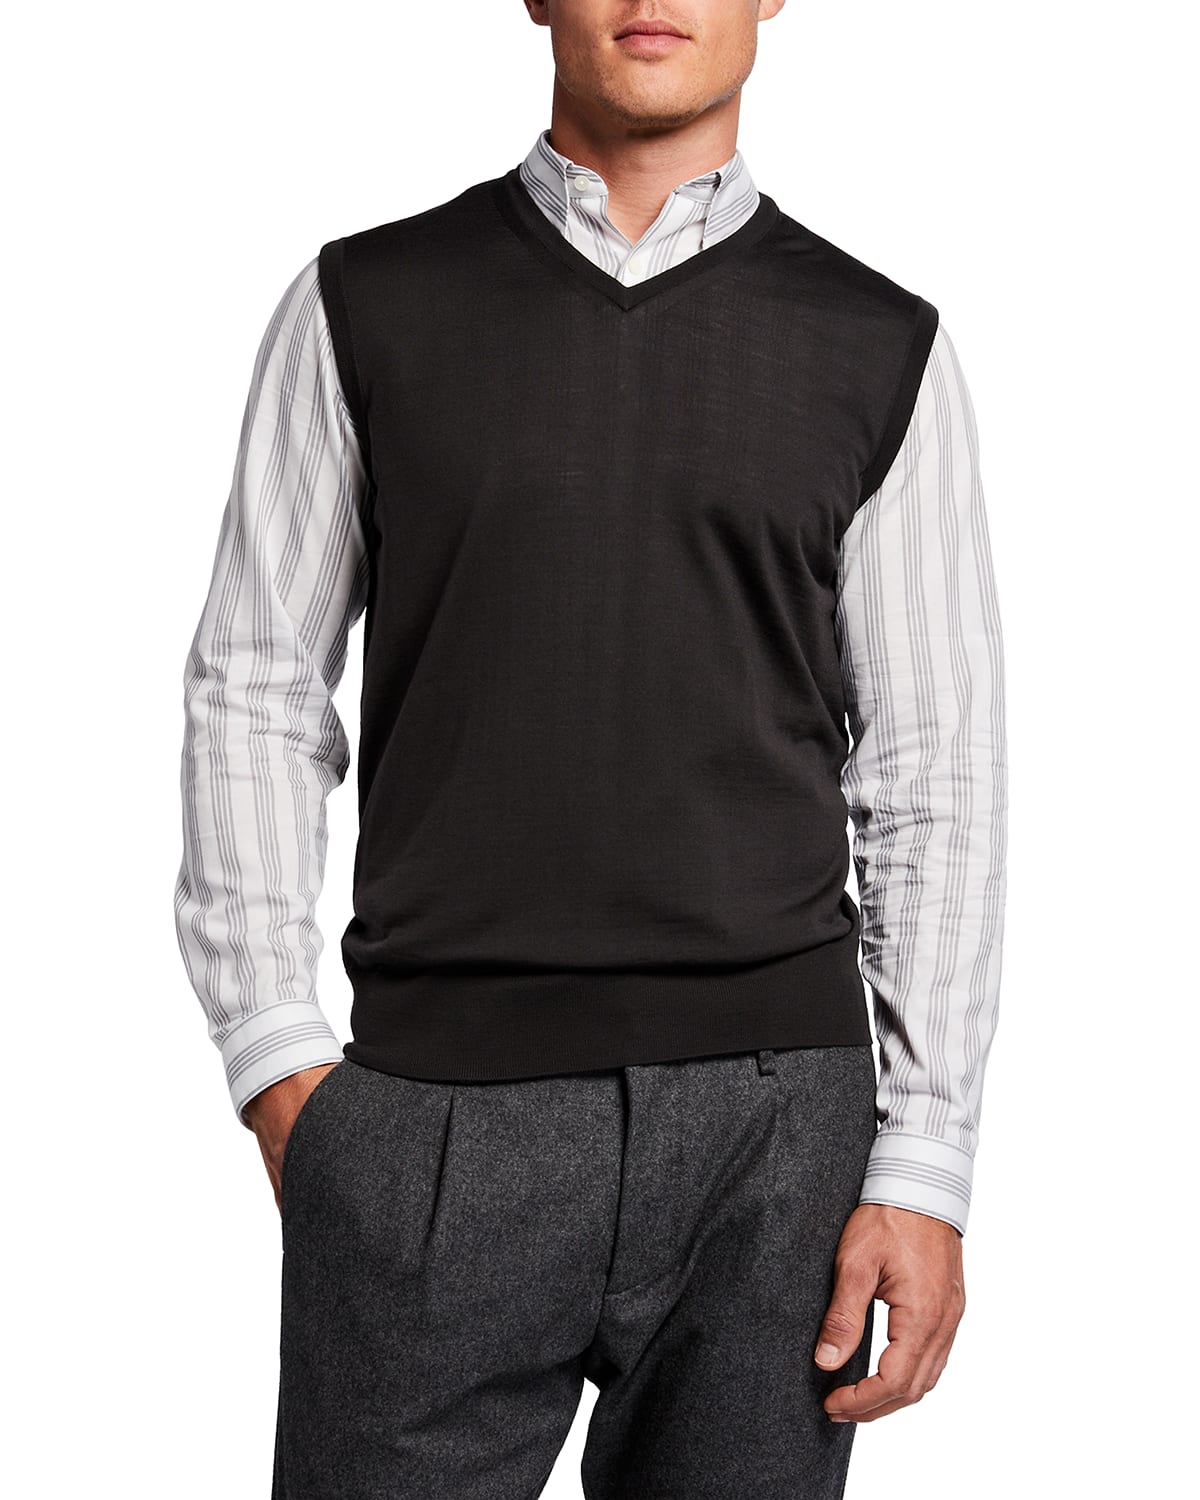 Men's Gilet Wish Wool V-Neck Sweater Vest